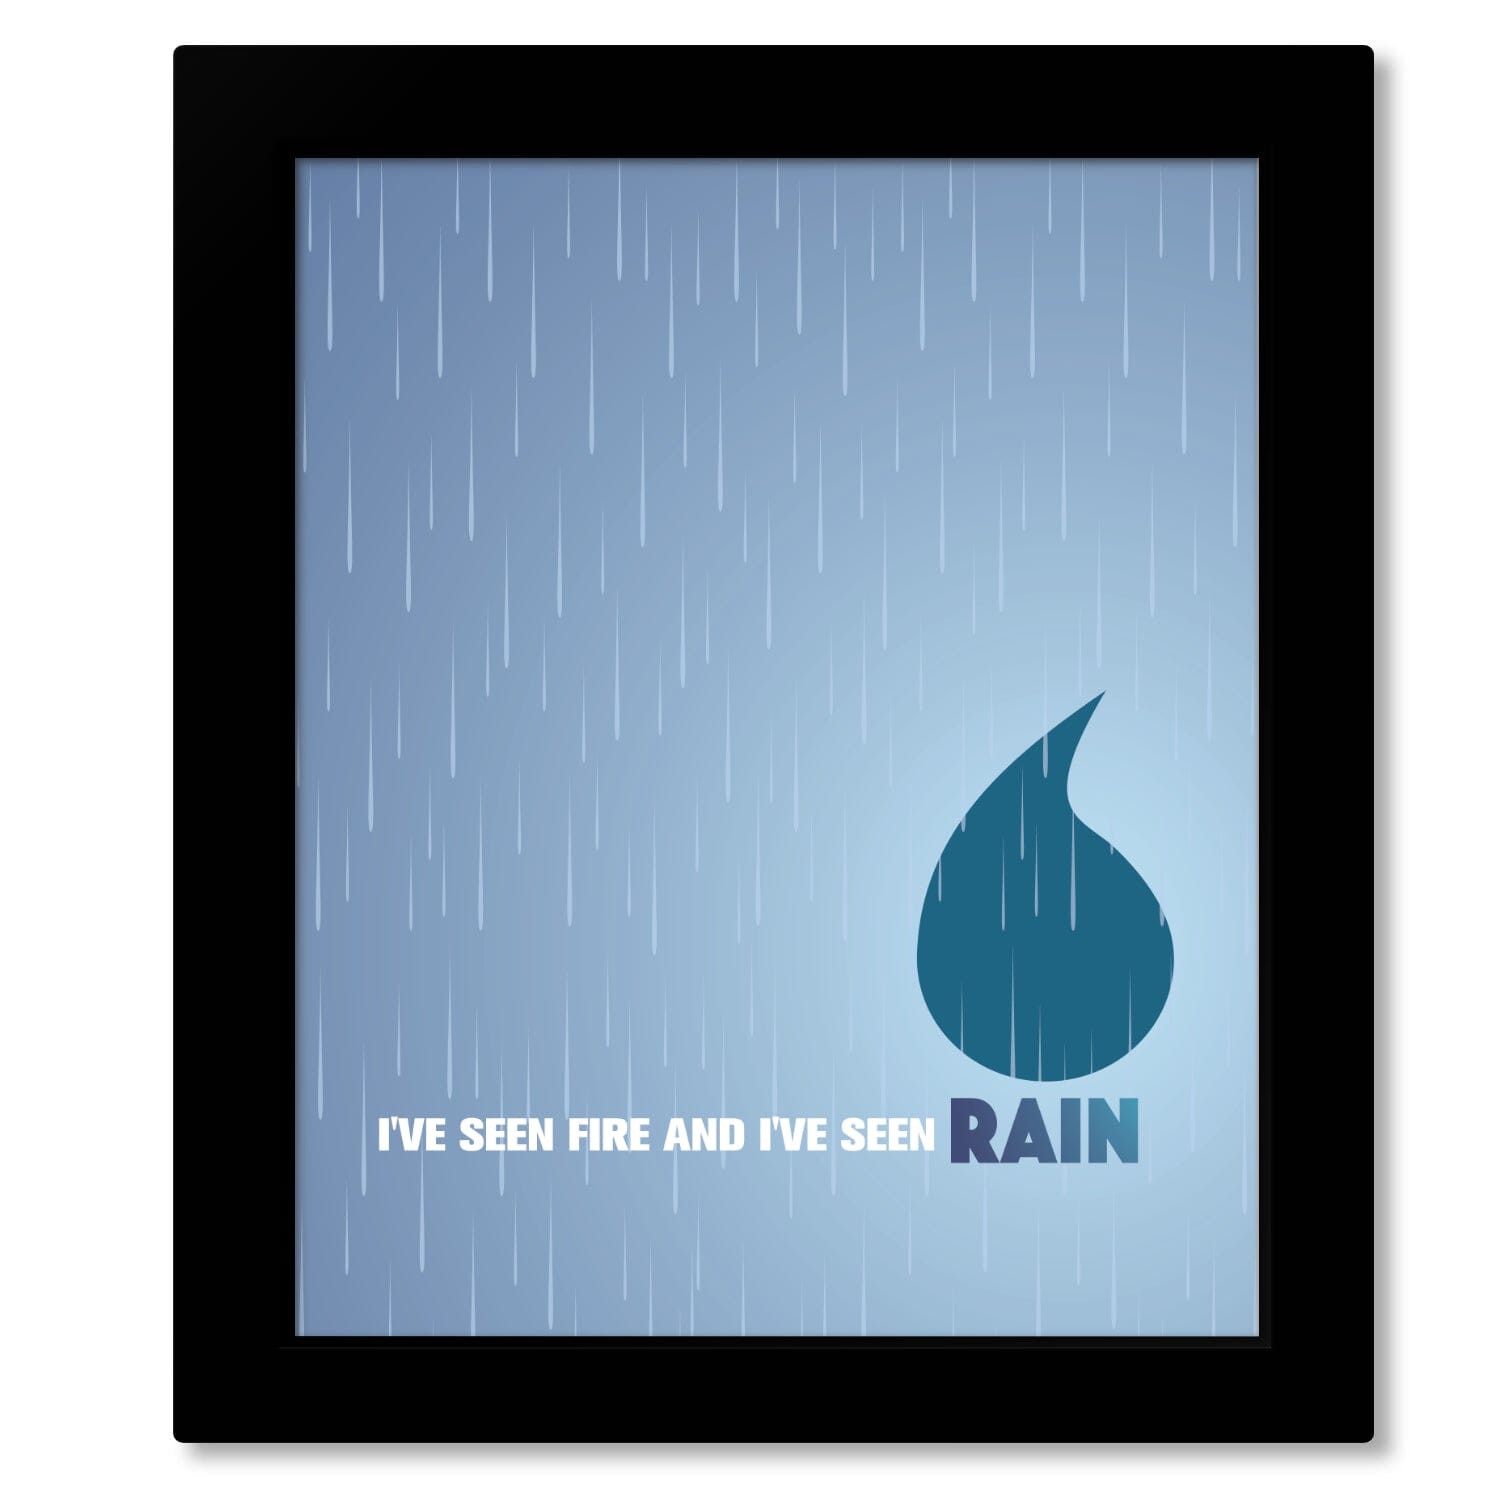 Fire and Rain by James Taylor - Music Wall Art Print Poster Song Lyrics Art Song Lyrics Art 8x10 Framed Print (without mat) 